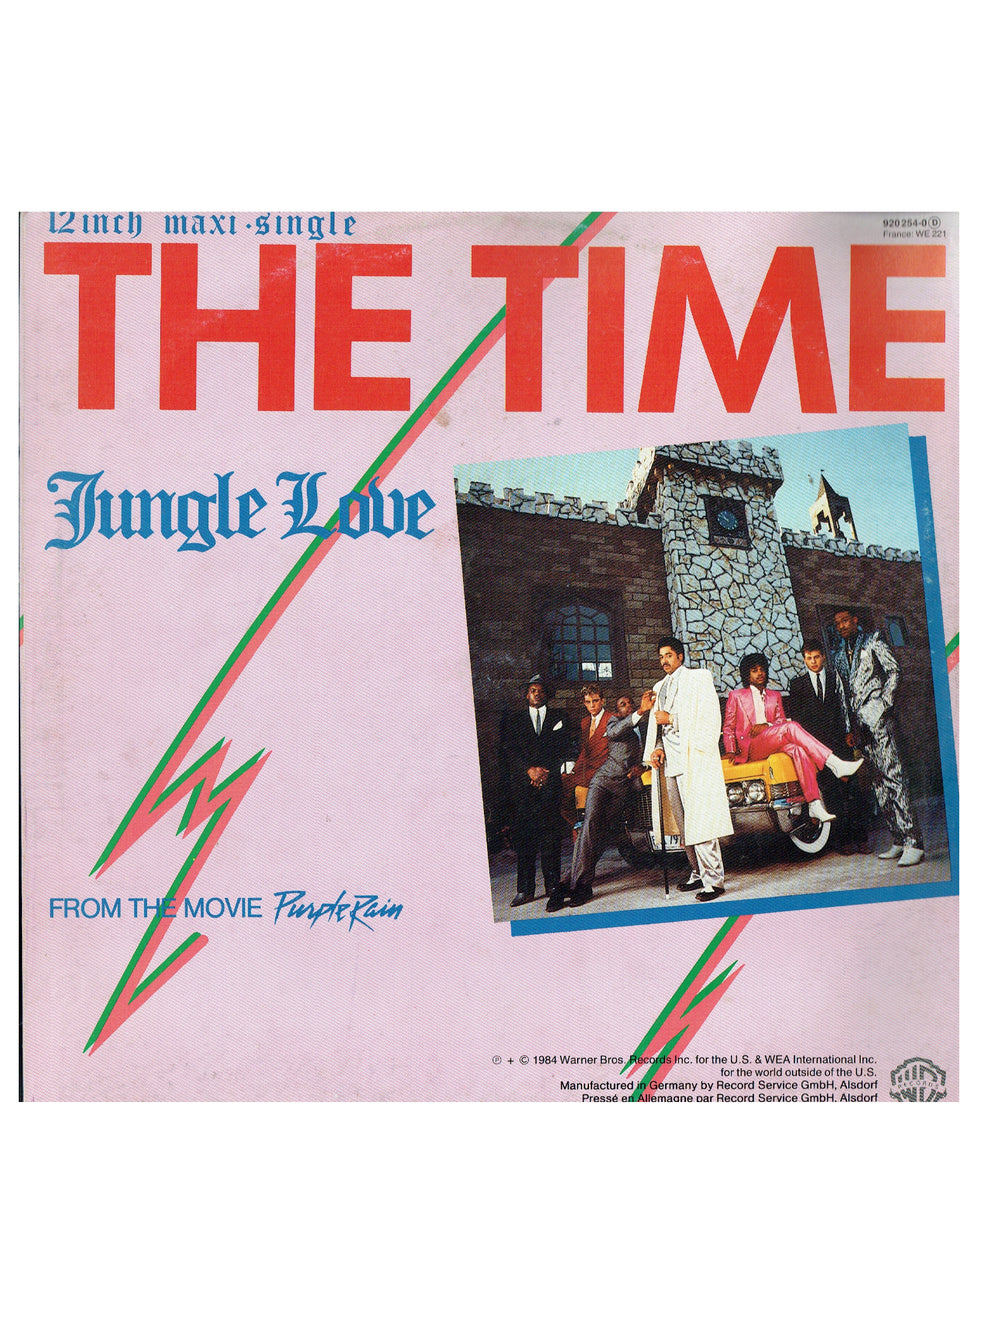 Prince – The Time Jungle Love Tricky 12 Inch Vinyl Single EU Release Original 1984 Prince